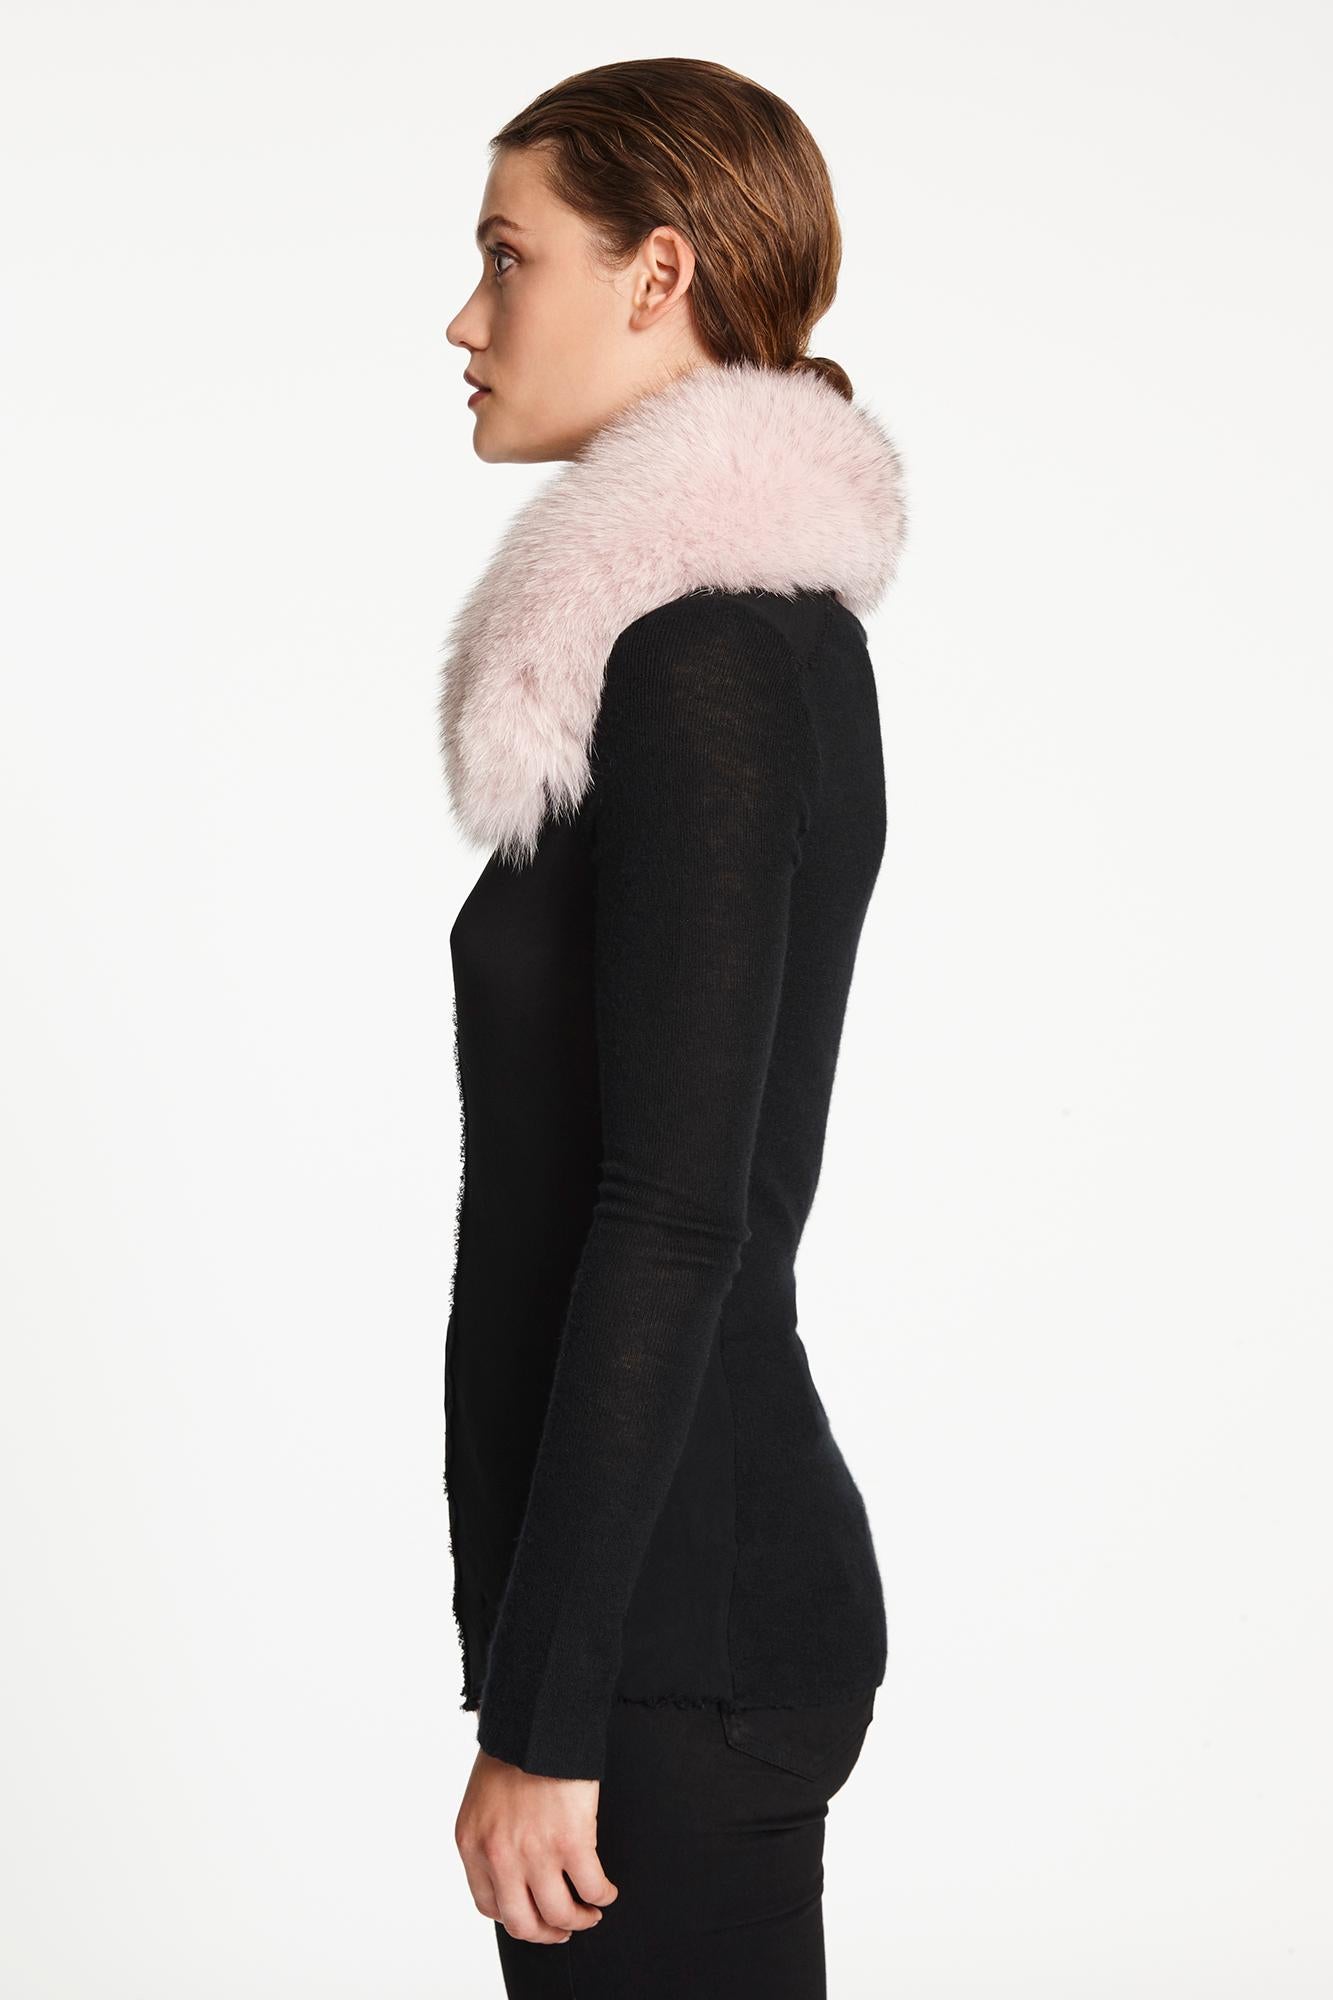 Verheyen London Peter Pan Collar in Pastel Rose Pink Fox Fur - Brand New  2